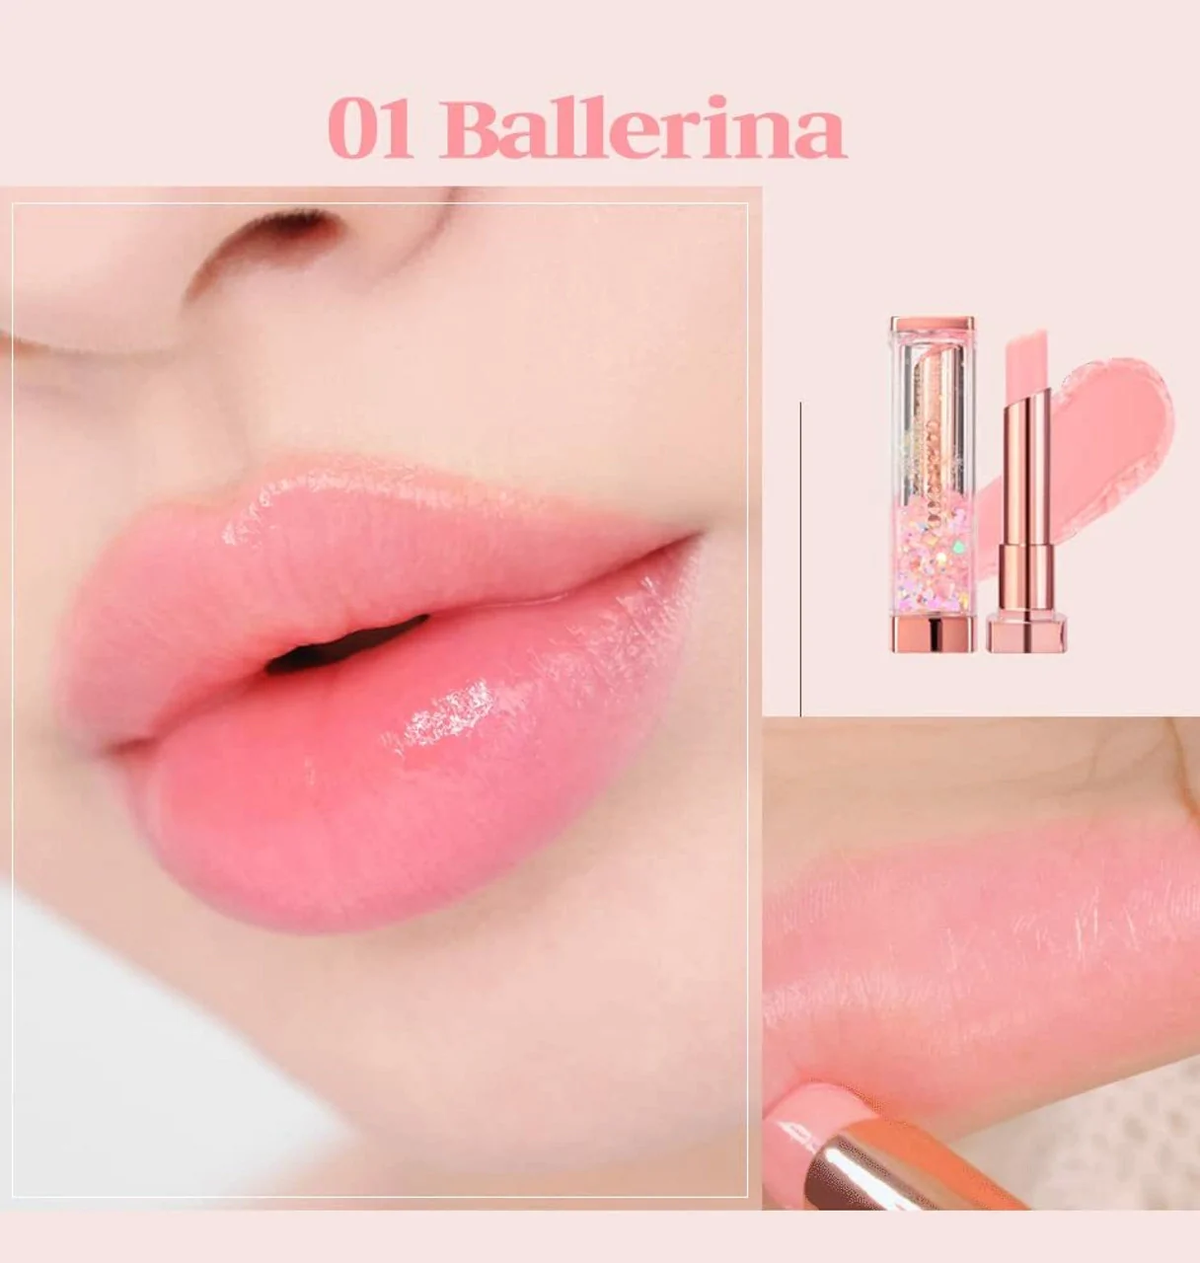 CORINGCO - Shalala Snow Ball Lip Balm 01 Ballerina